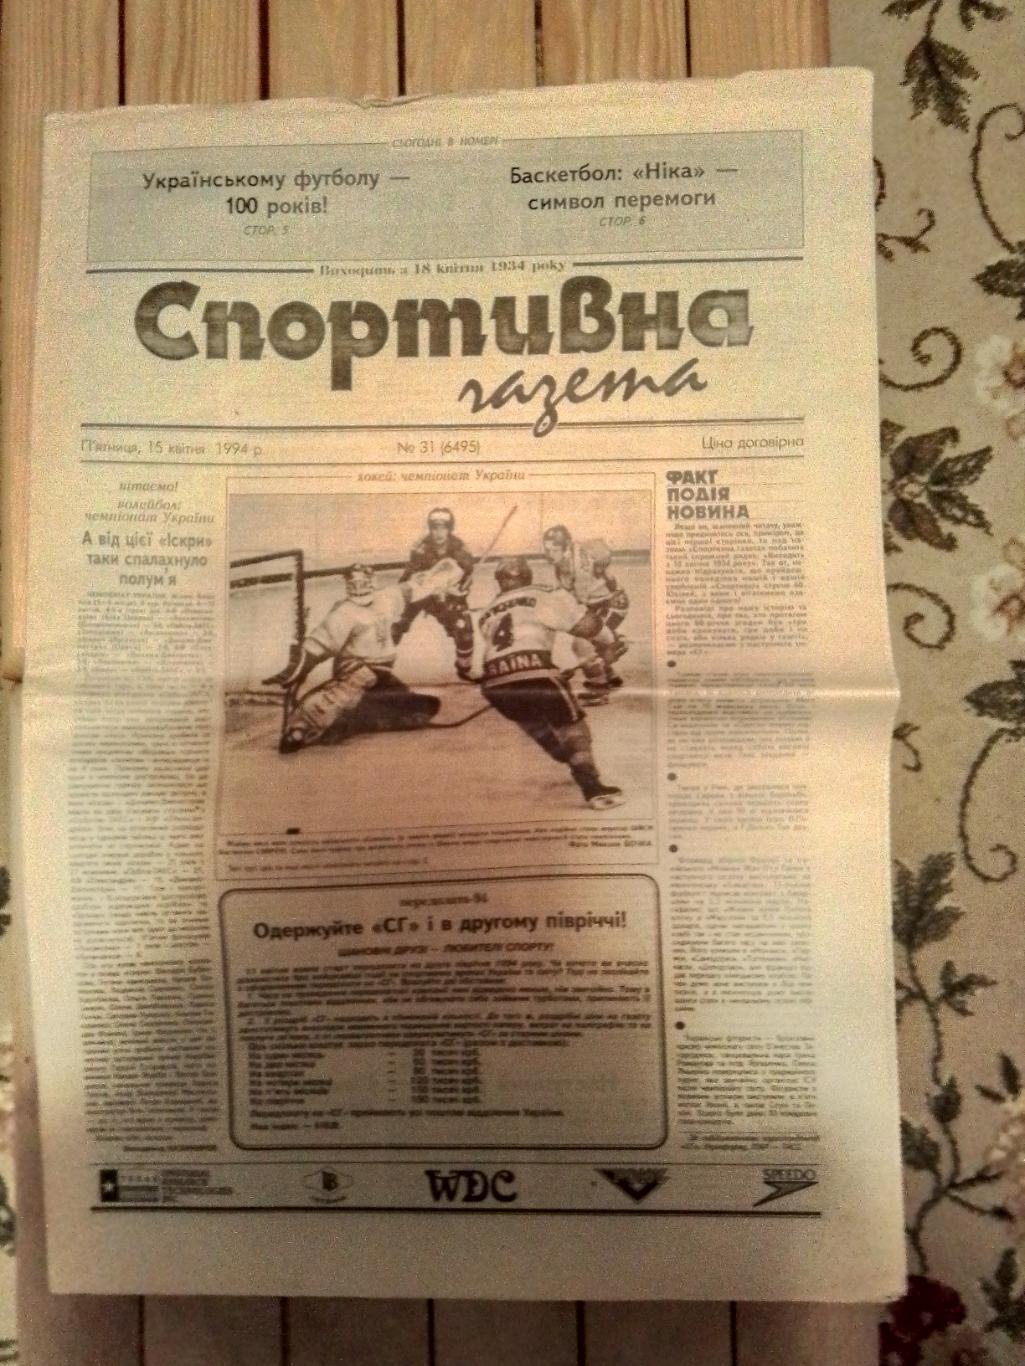 Спортивна газета Киев 15.04. 1994 N 31 (6495) Кубок Украины 1/4